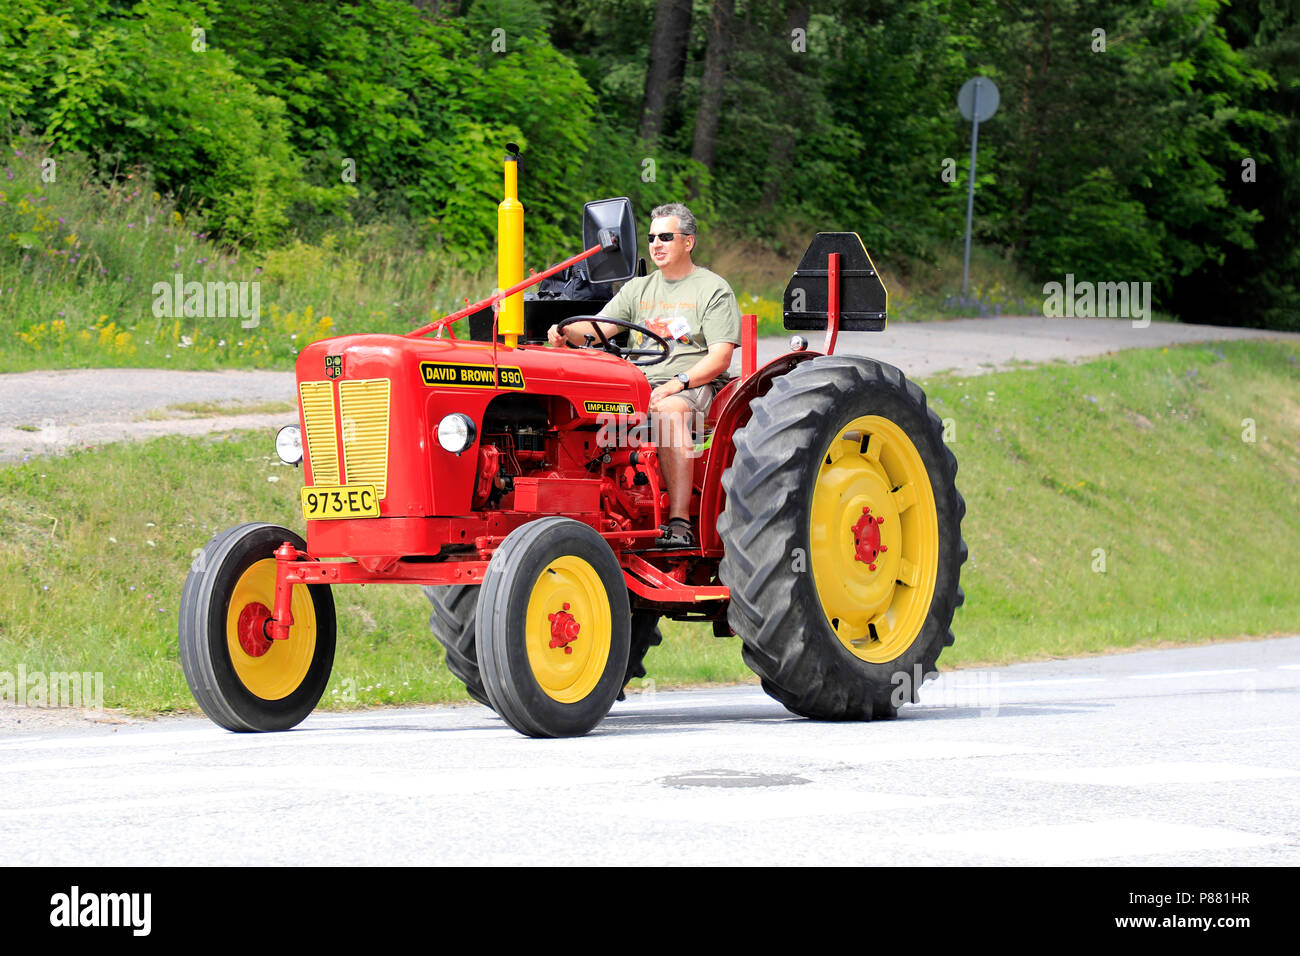 Classic David Brown 990 tractor and driver on Kimito Tractorkavalkad, Tractor Cavalcade, an annual tractor show in Kimito, Finland - July 7, 2018. Stock Photo